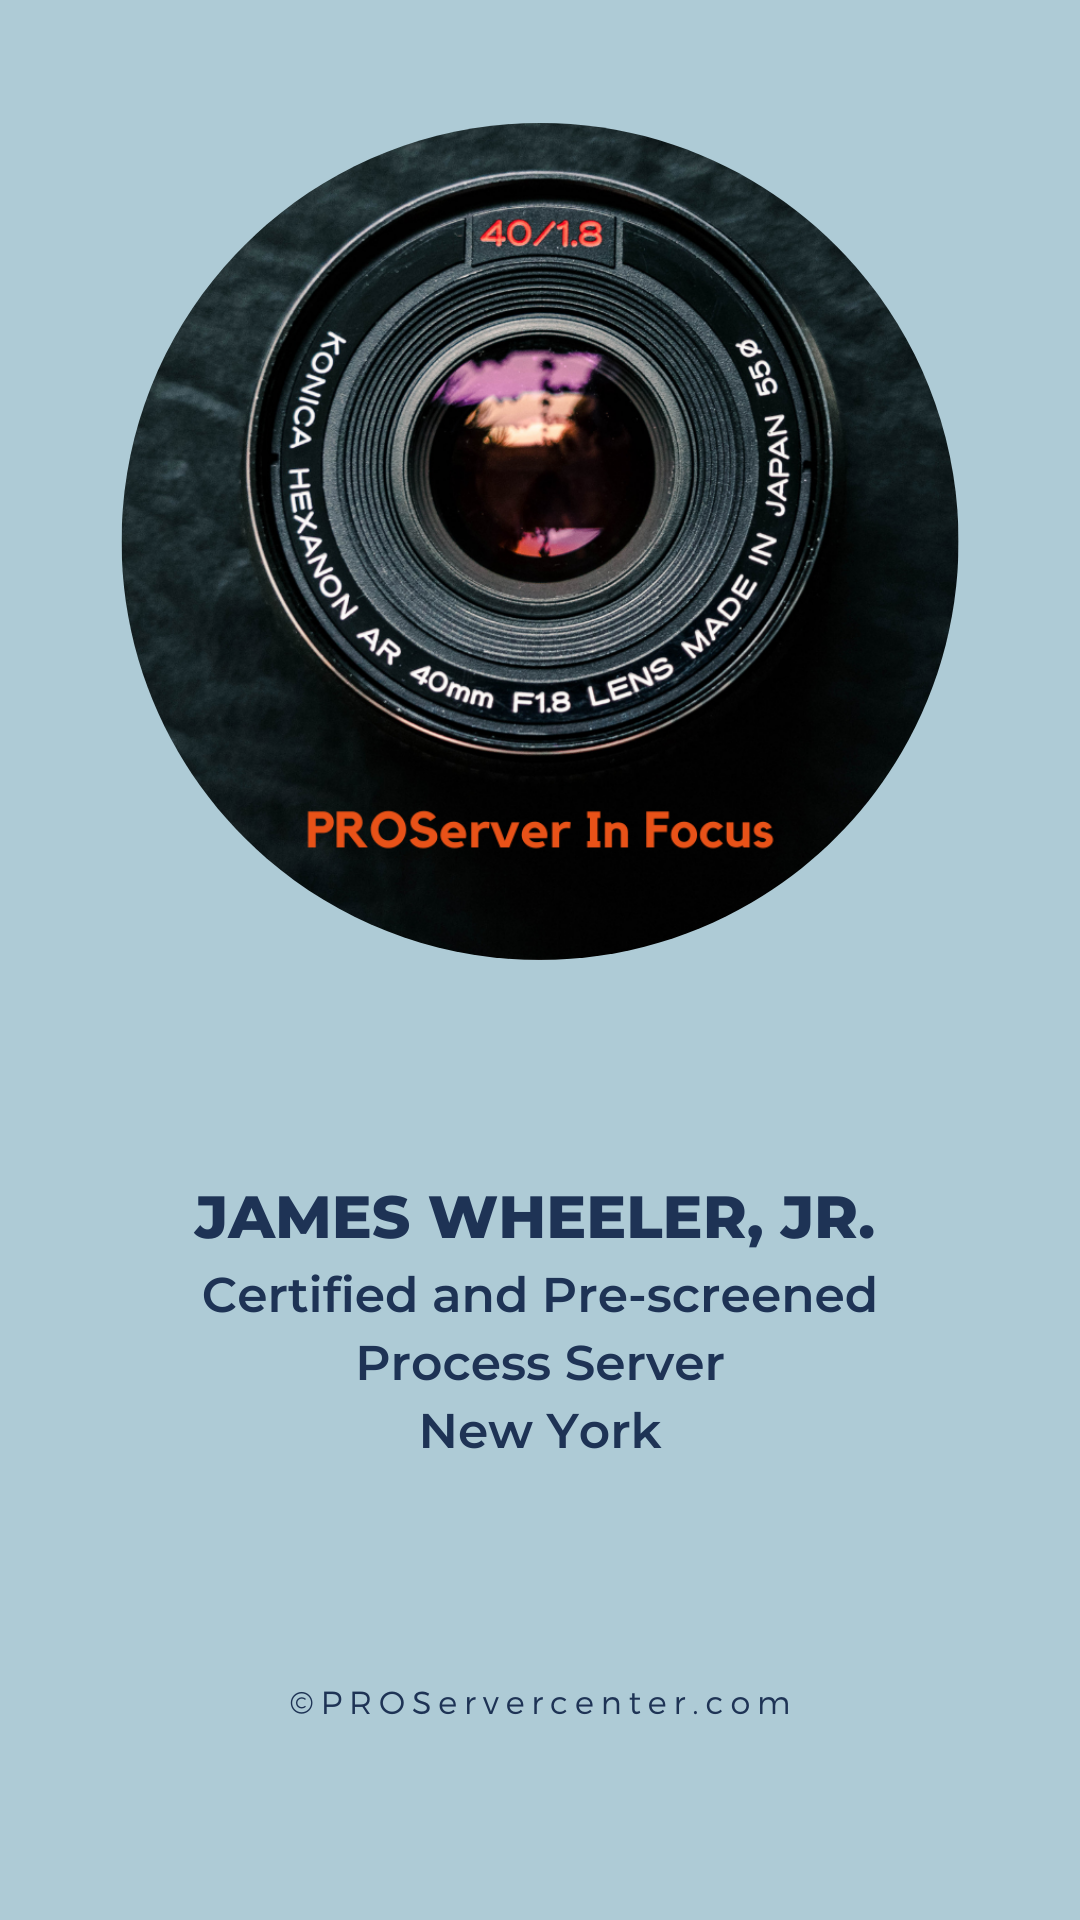 james wheeler, process server member of PROServer list